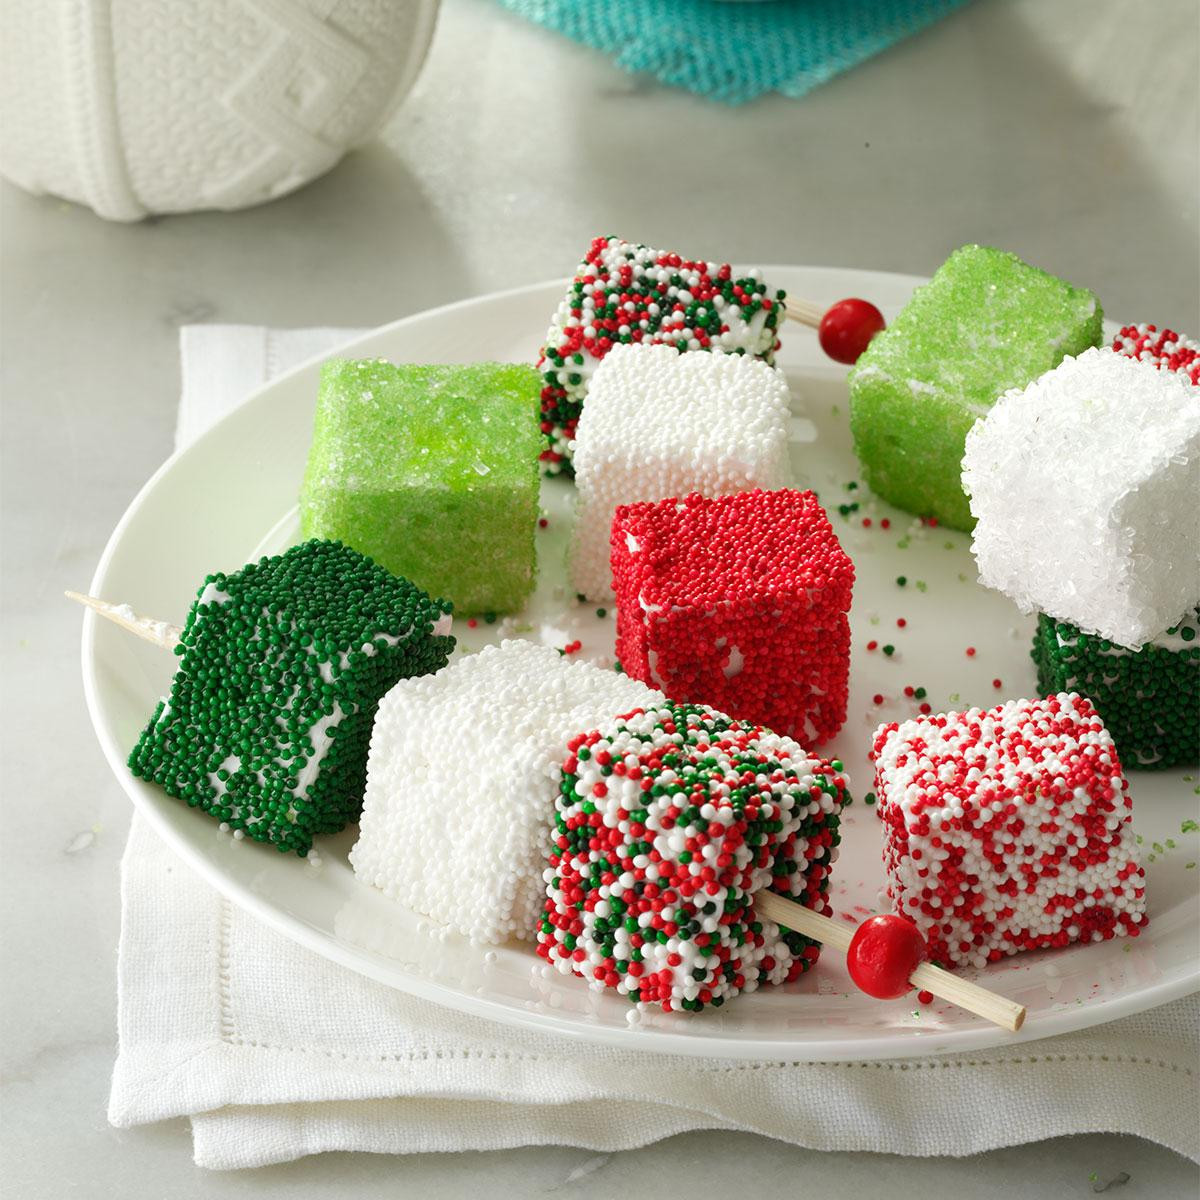 Homemade Christmas Candy
 Homemade Holiday Marshmallows Recipe